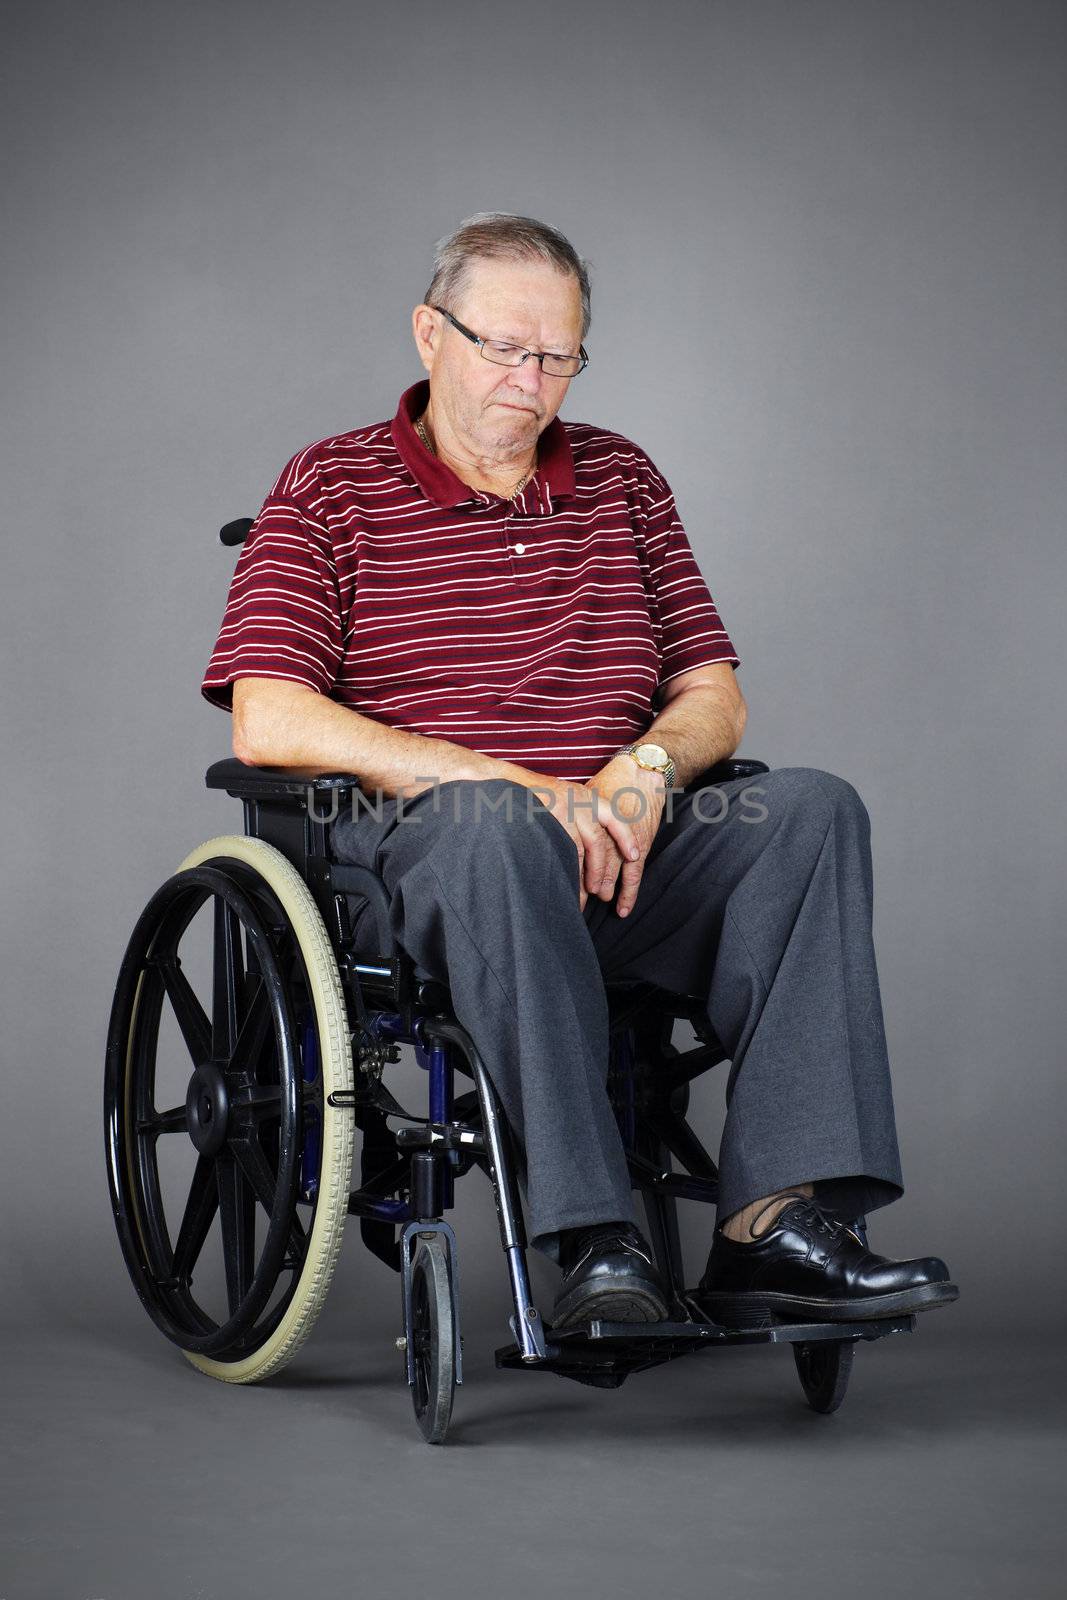 Sad or depressed senior man in a wheelchair, looking down, studio shot over grey background.